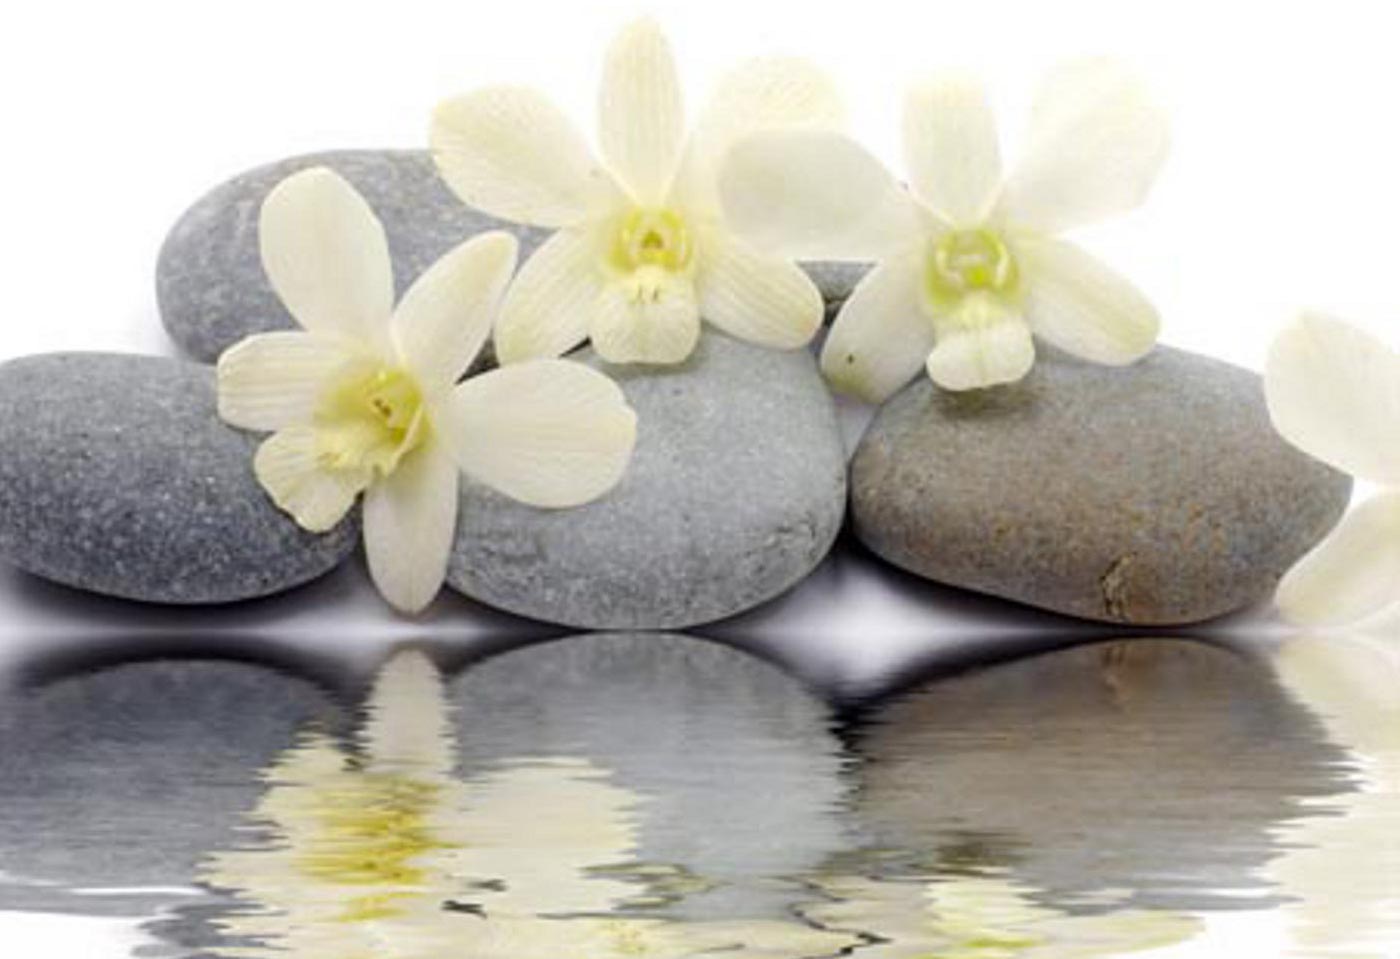 HD Wallpaper Zen Stones Reflecting White Flowers New Desktop